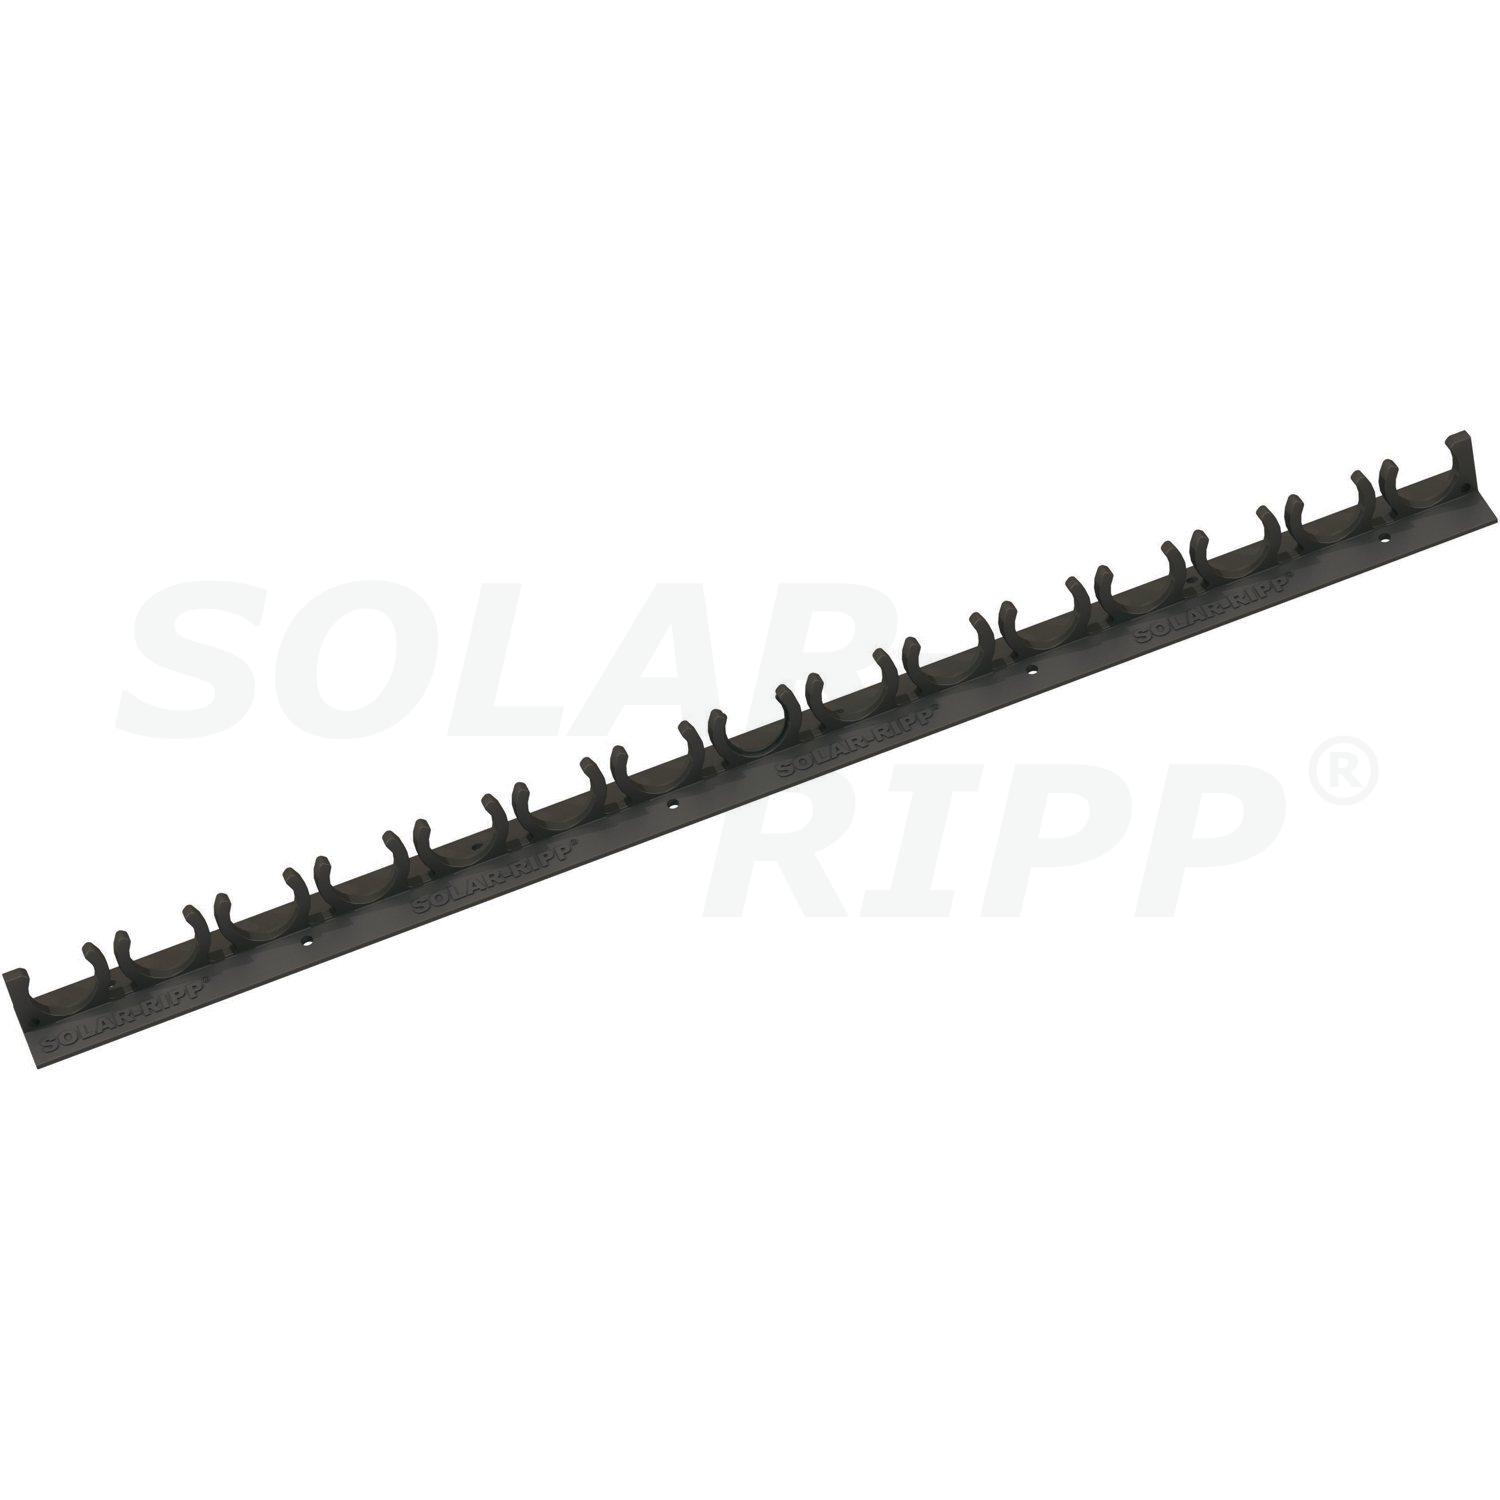 SOLAR-RIPP ® clip bar (spacer)